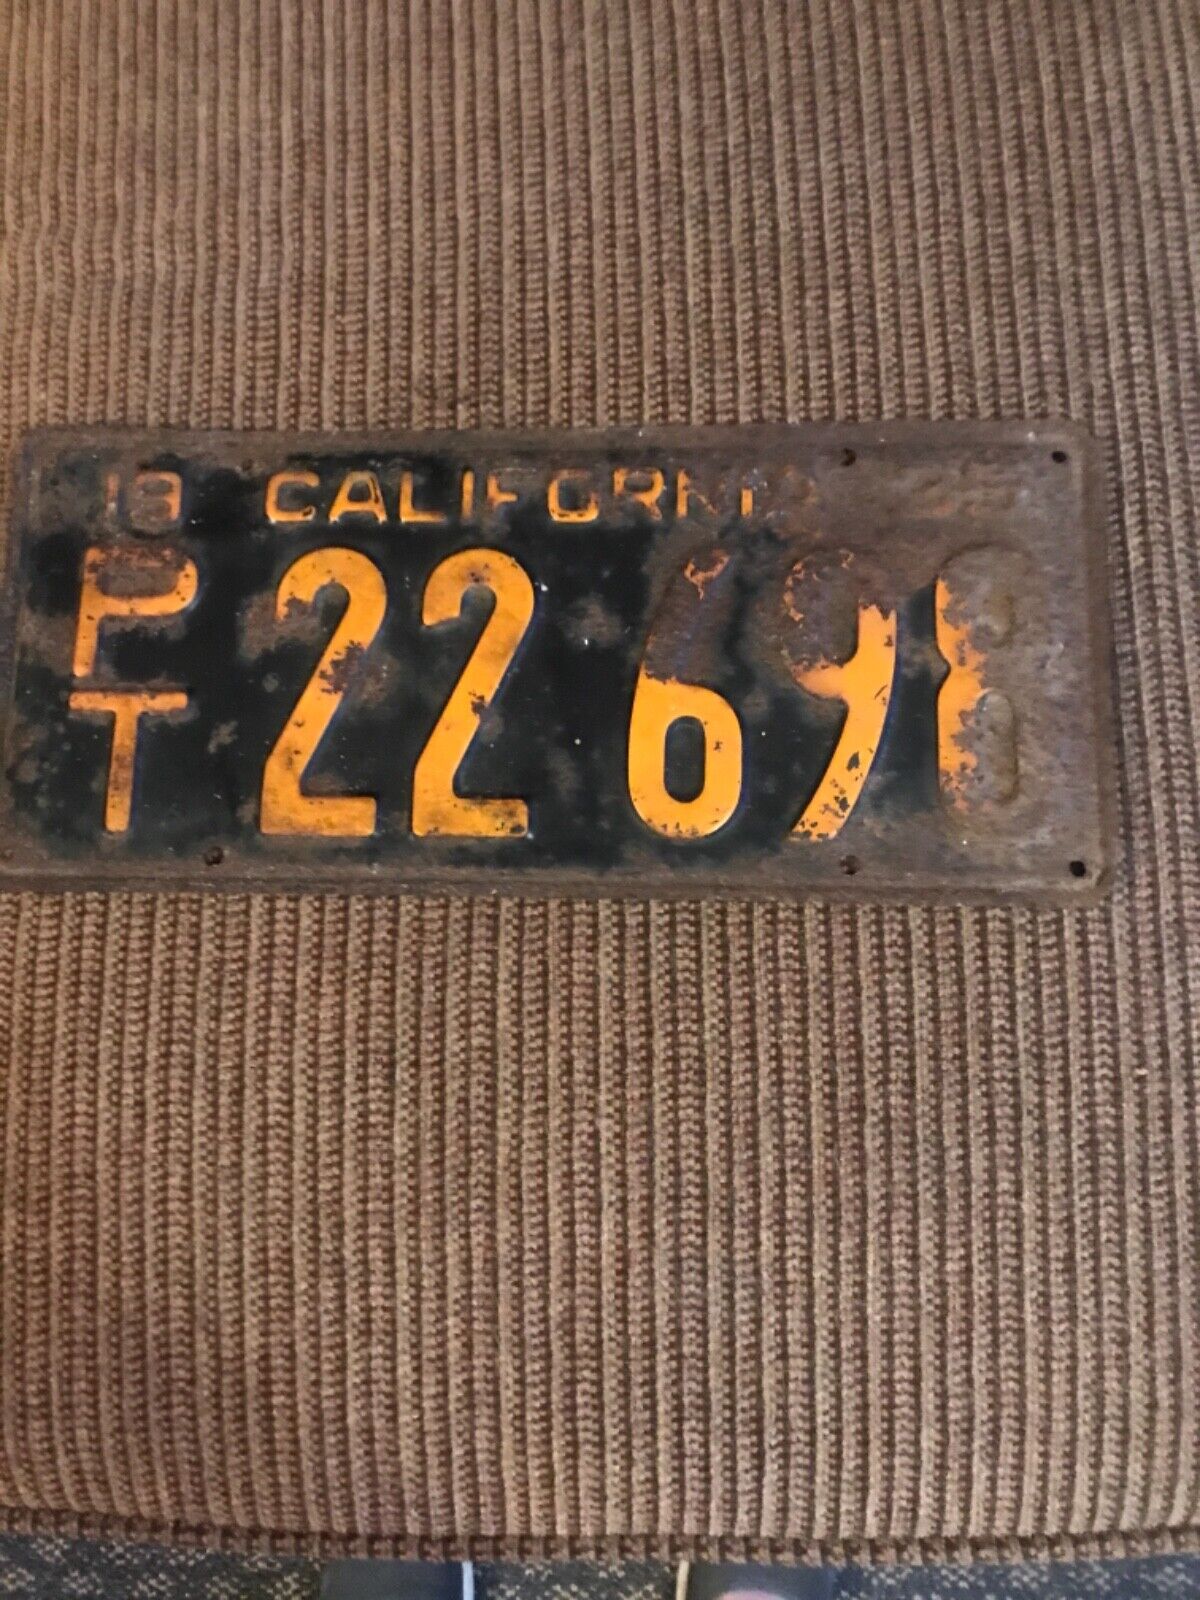 1935 California license plate PT 22698